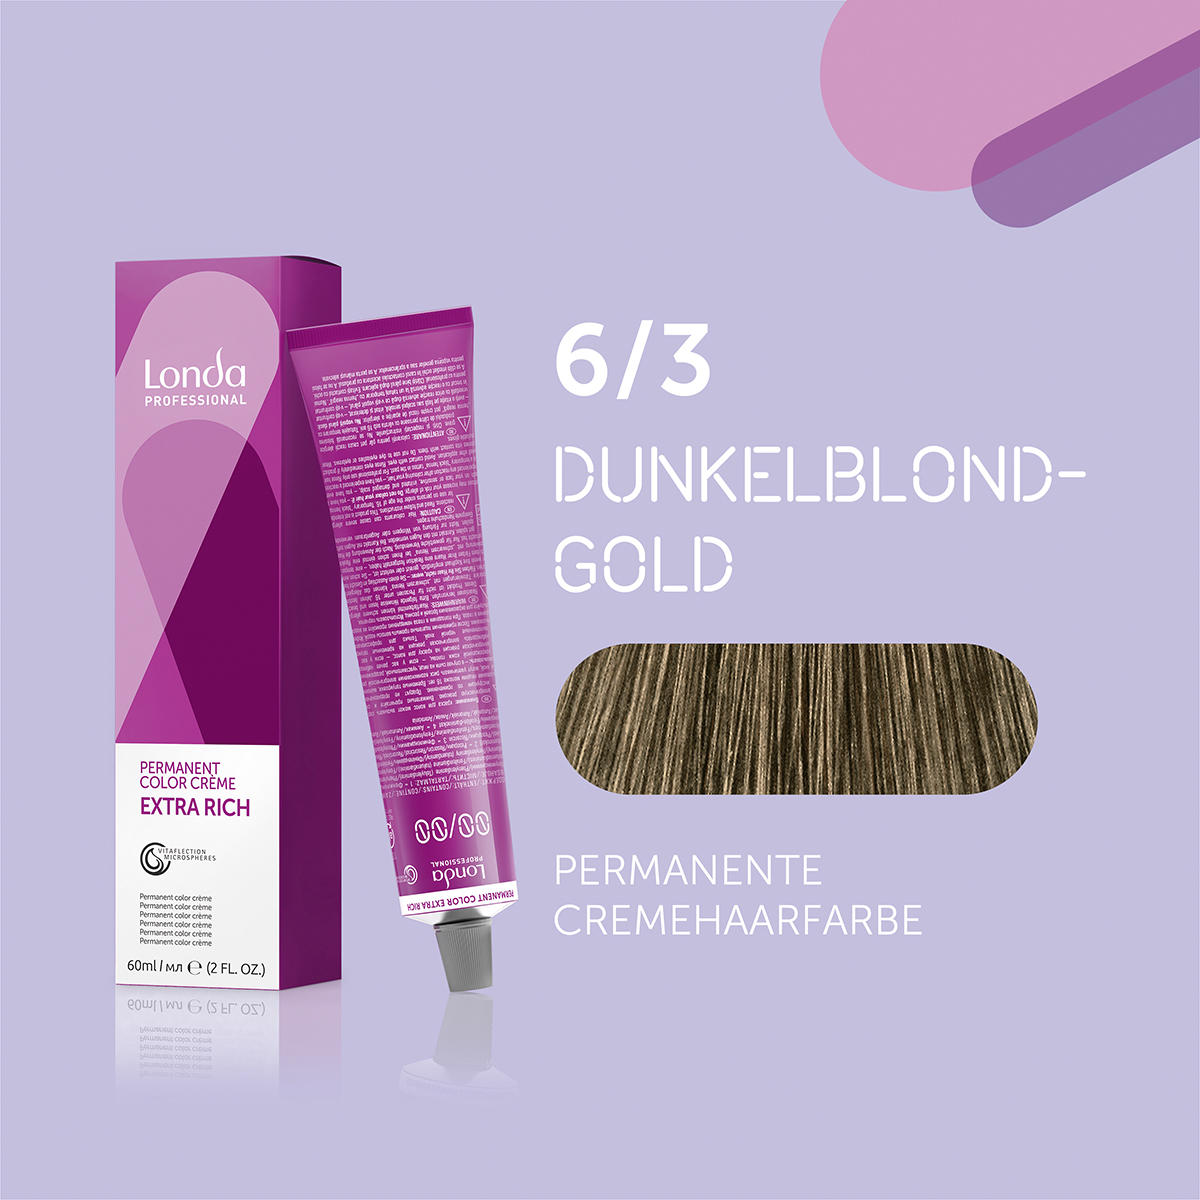 Londa Permanente Cremehaarfarbe Extra Rich 6/3 Dunkelblond Gold, Tube 60 ml - 1